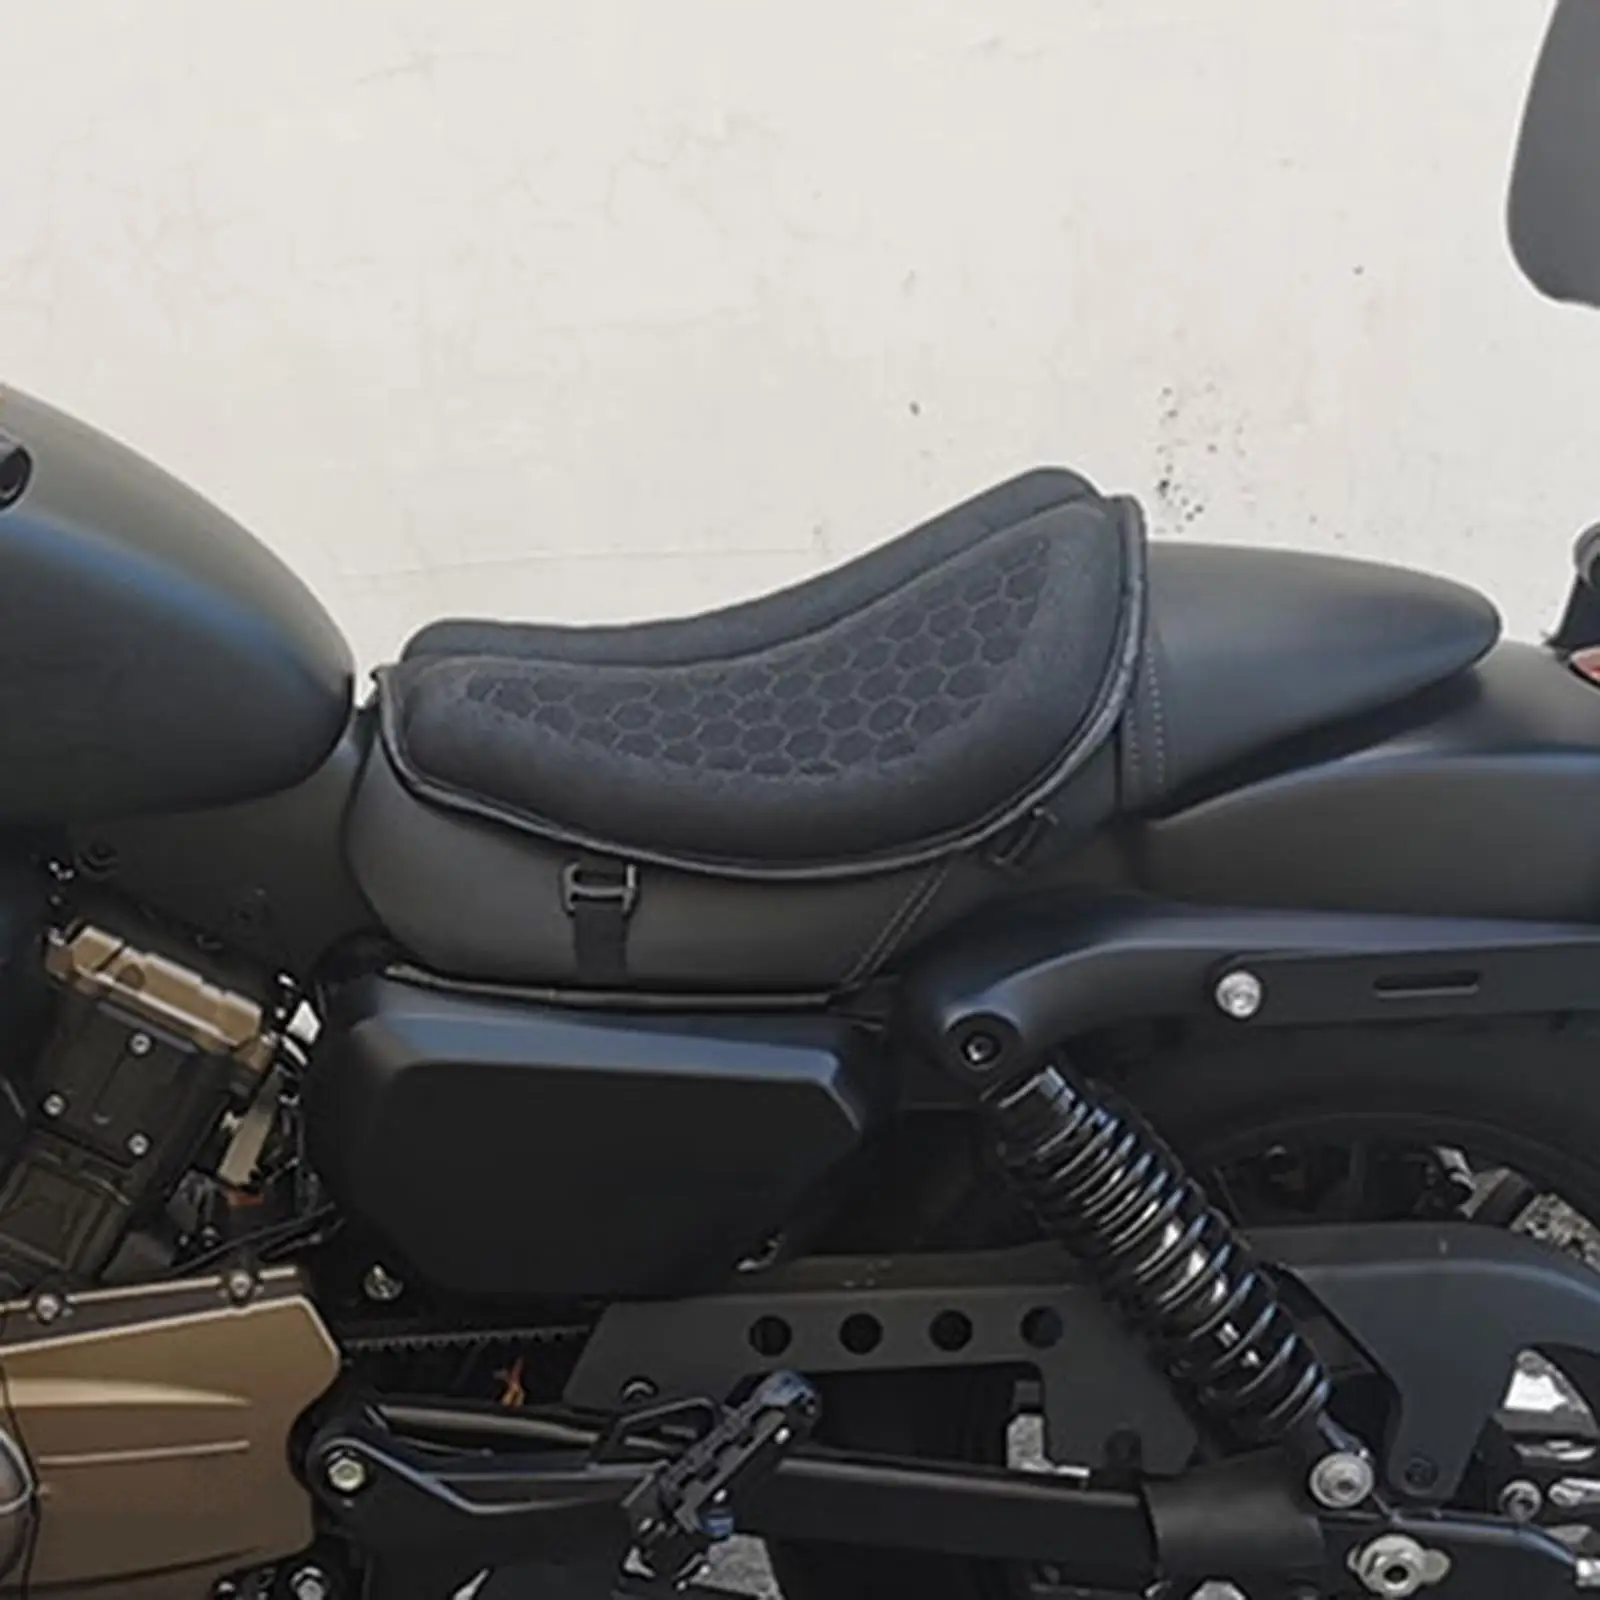 Universal Motorbike Seat Cushion, Shock Absorption Cooling Down